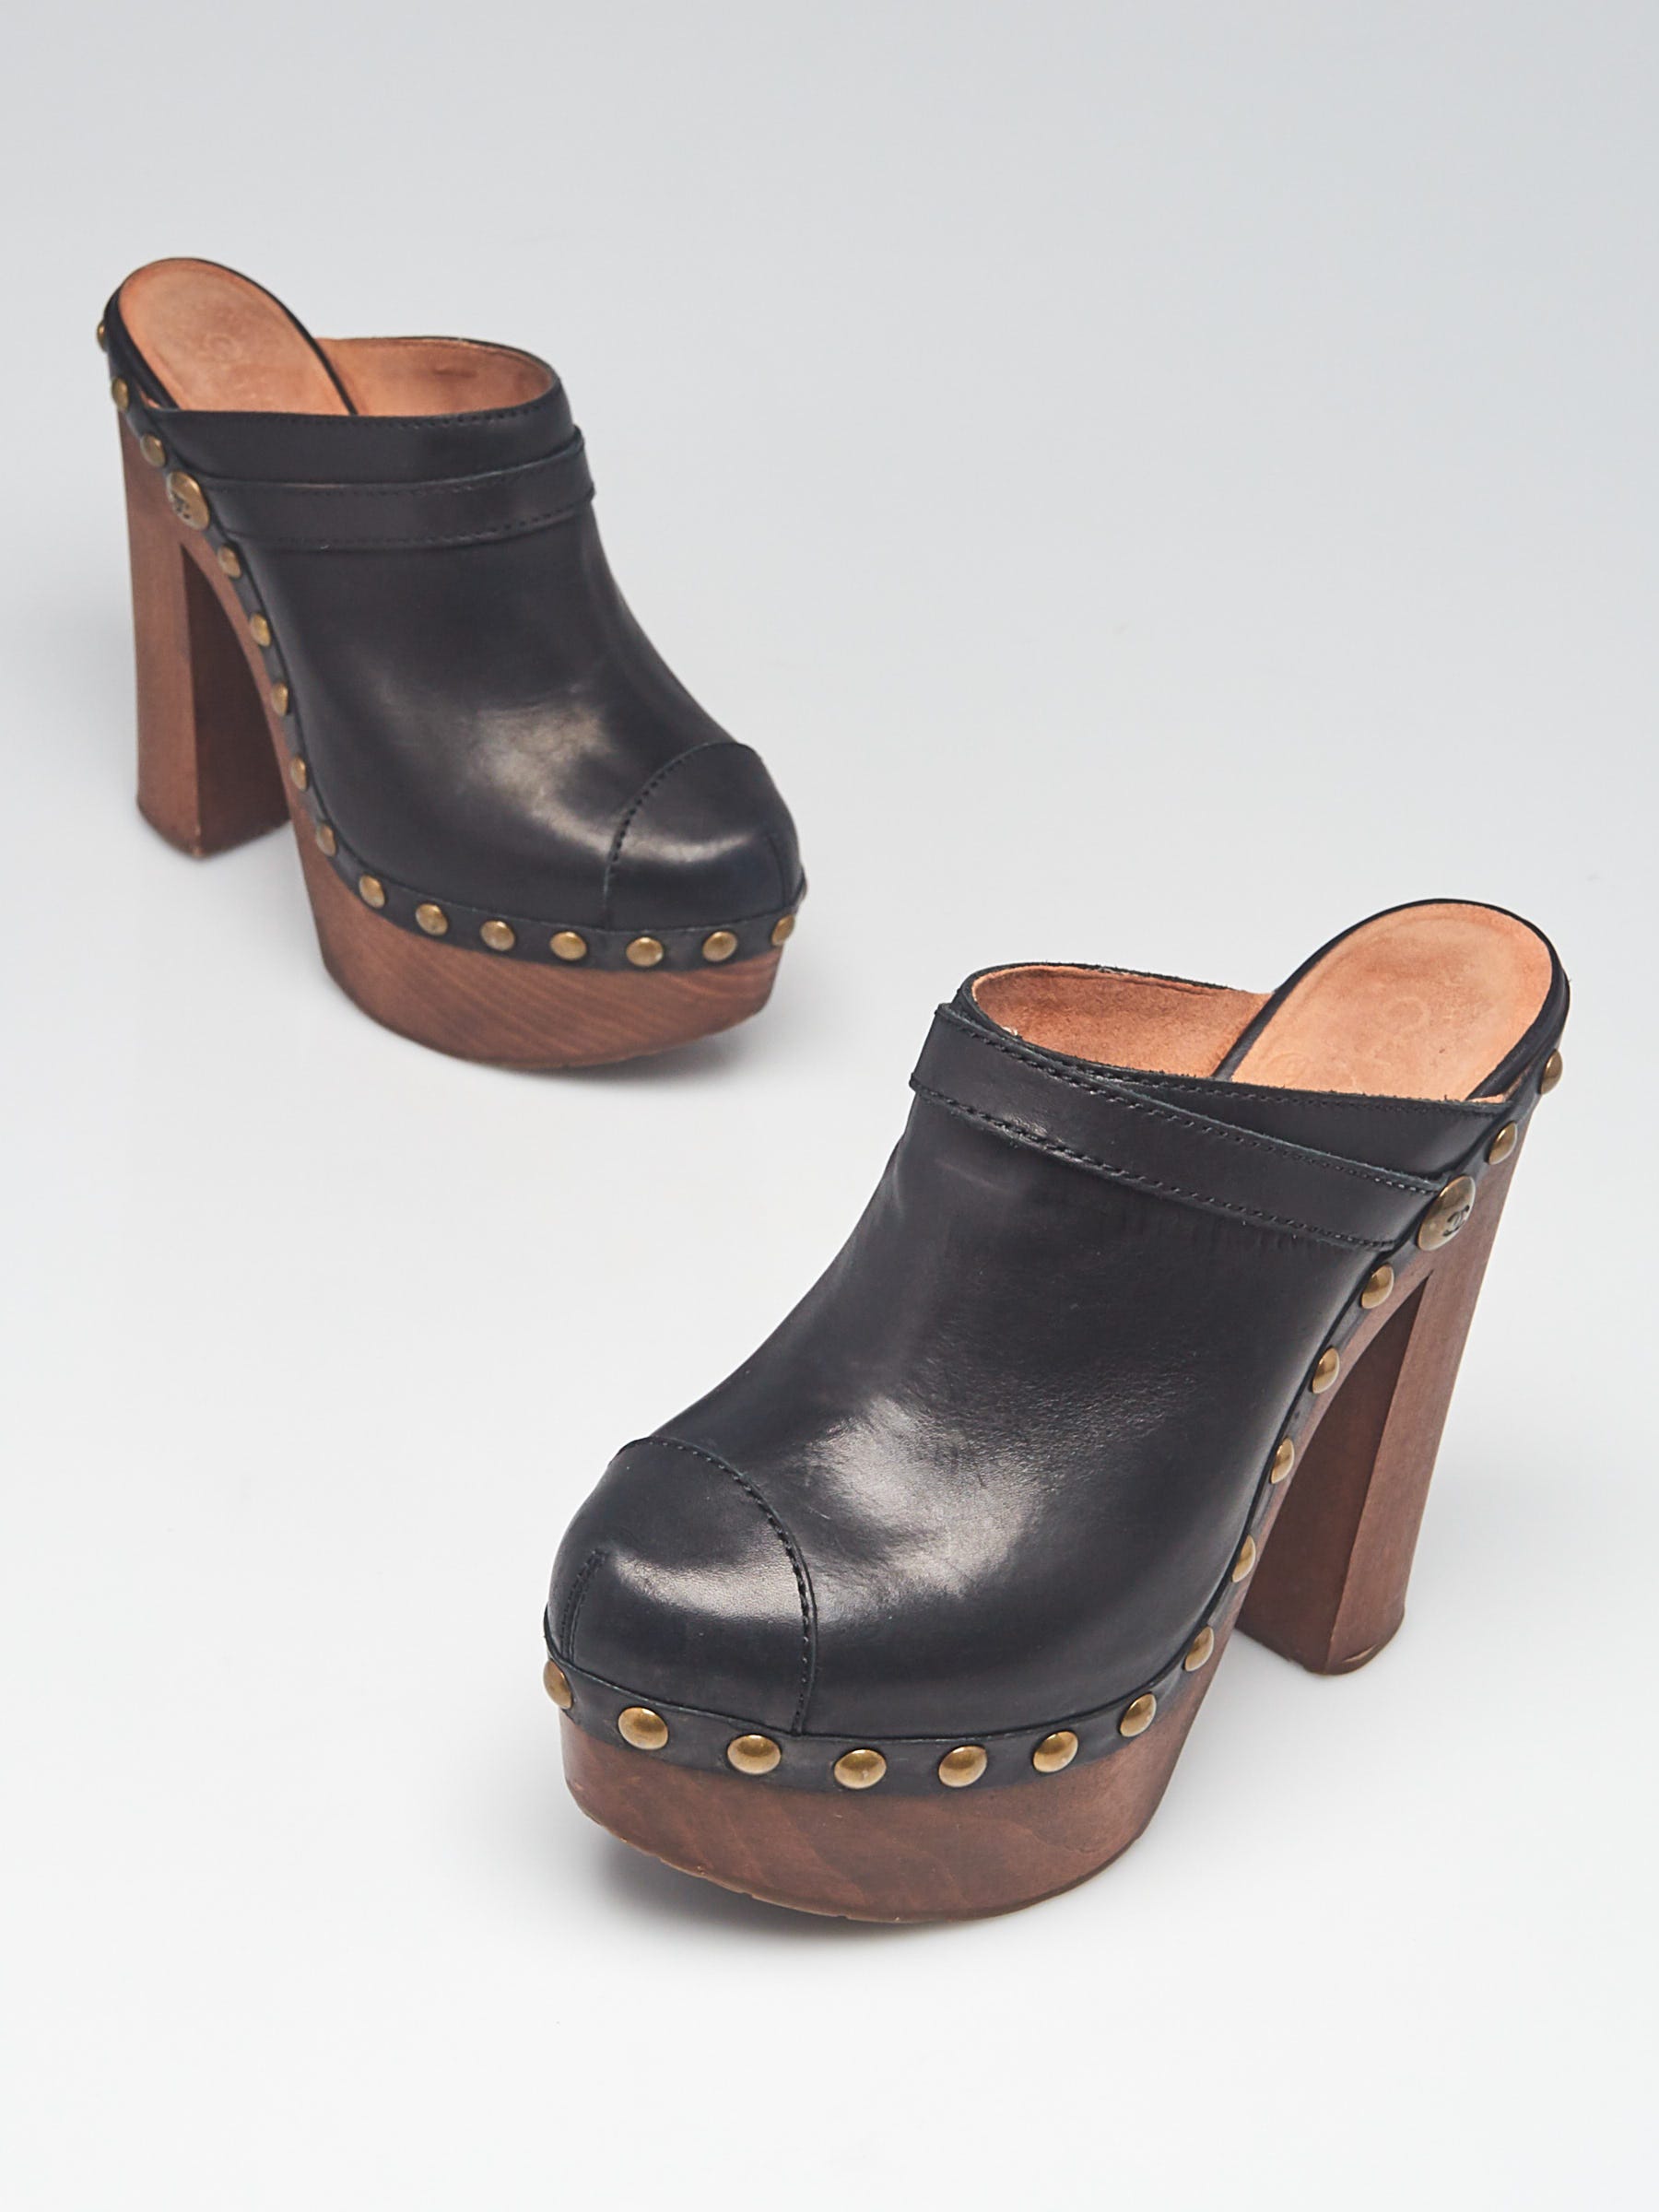 Chanel Black Leather Studded Platform Mule Clogs Size 6/36.5